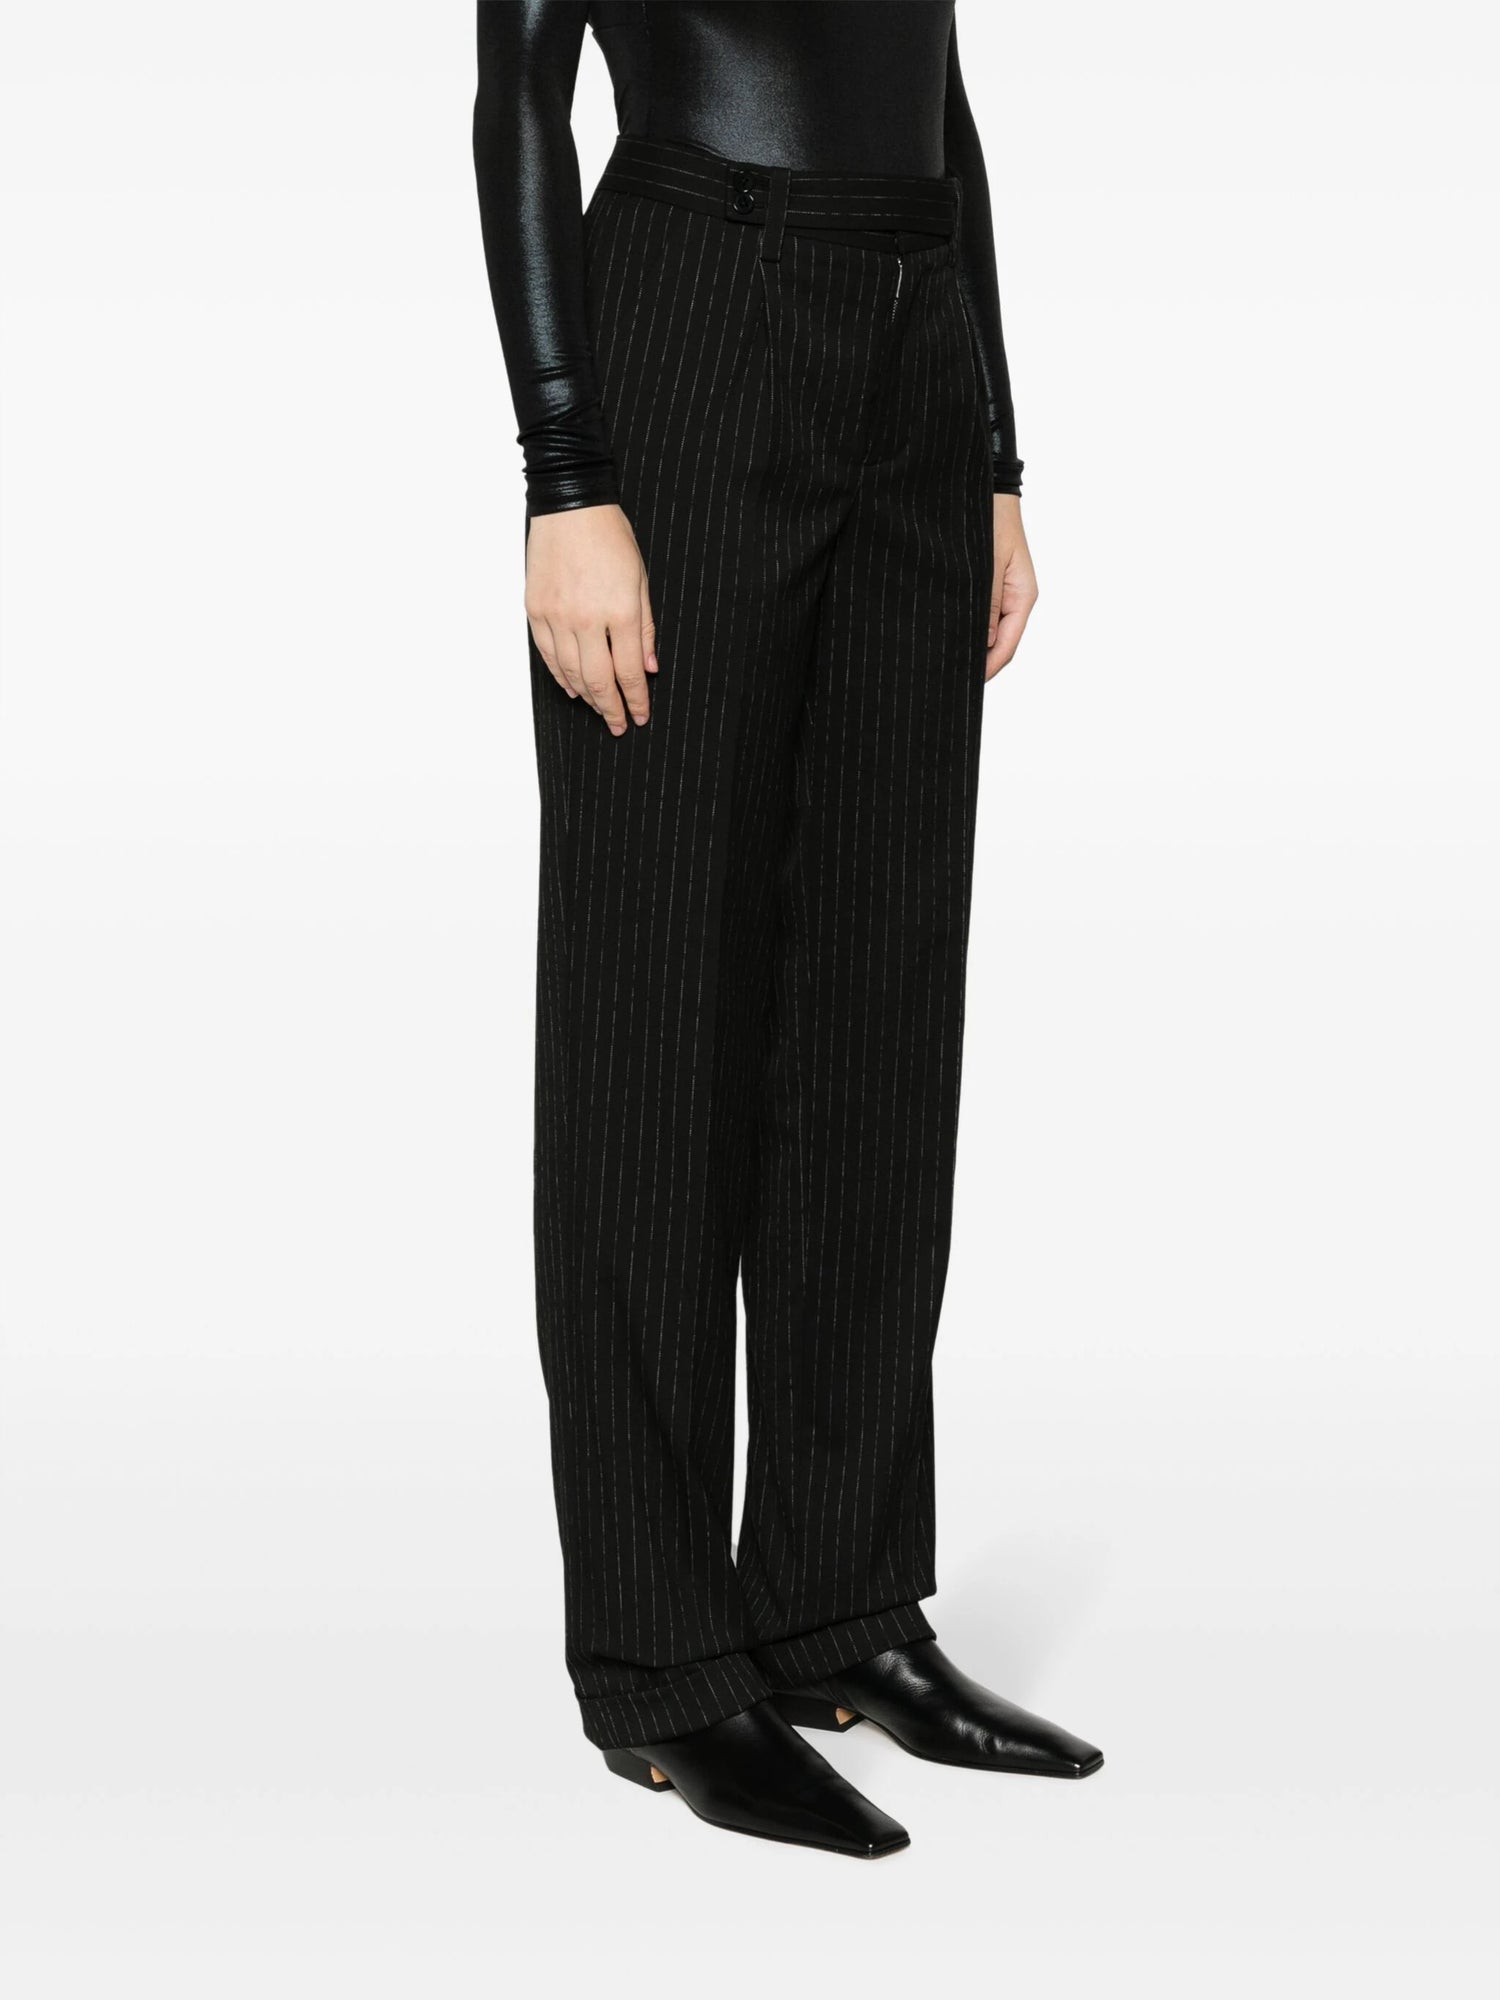 PURA TAILLEUR PINSTRIPE trousers, black